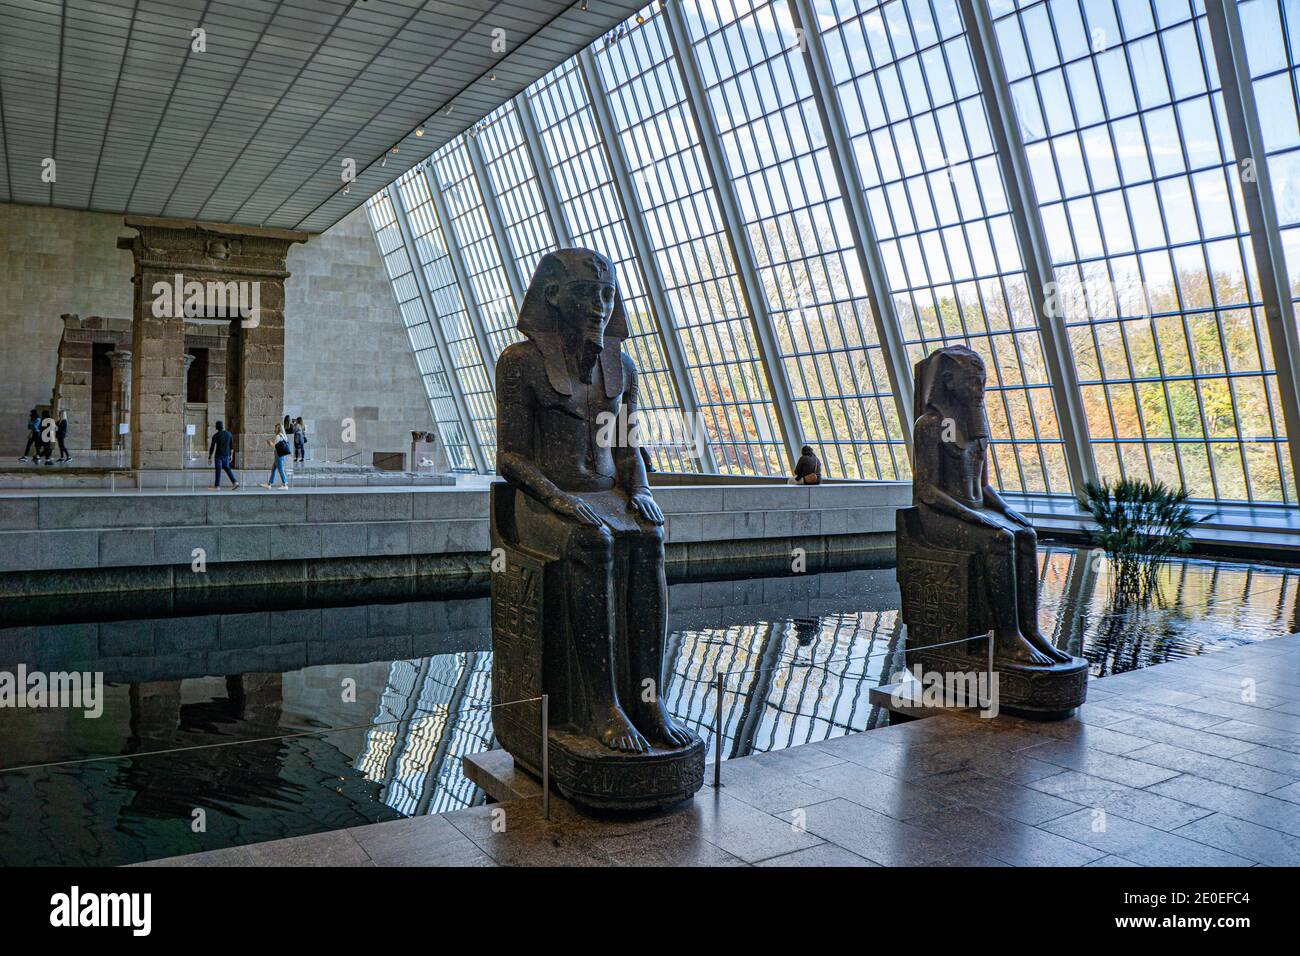 Temple of Dendur, Metropolitan Museum of Art, New York, New York, États-Unis Banque D'Images